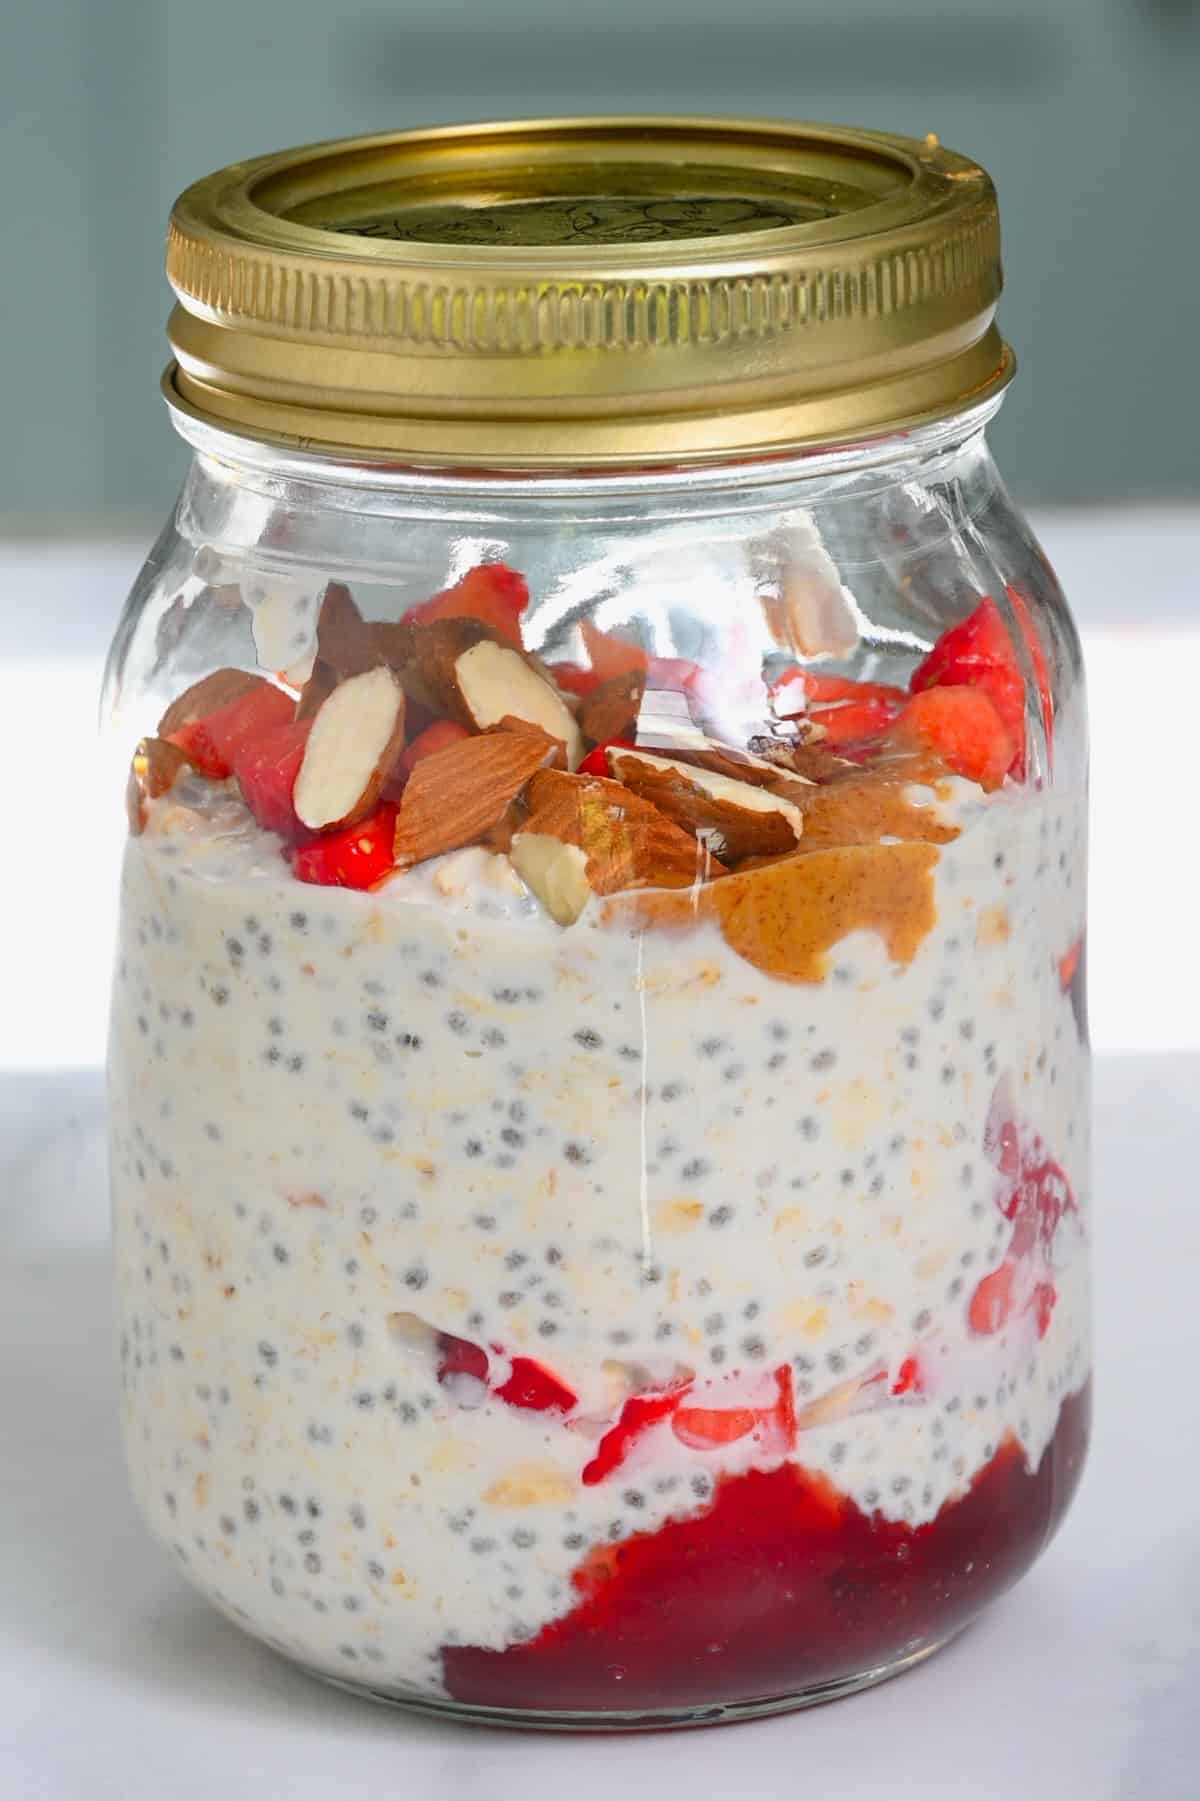 Strawberry shortcake overnight oats in a jar